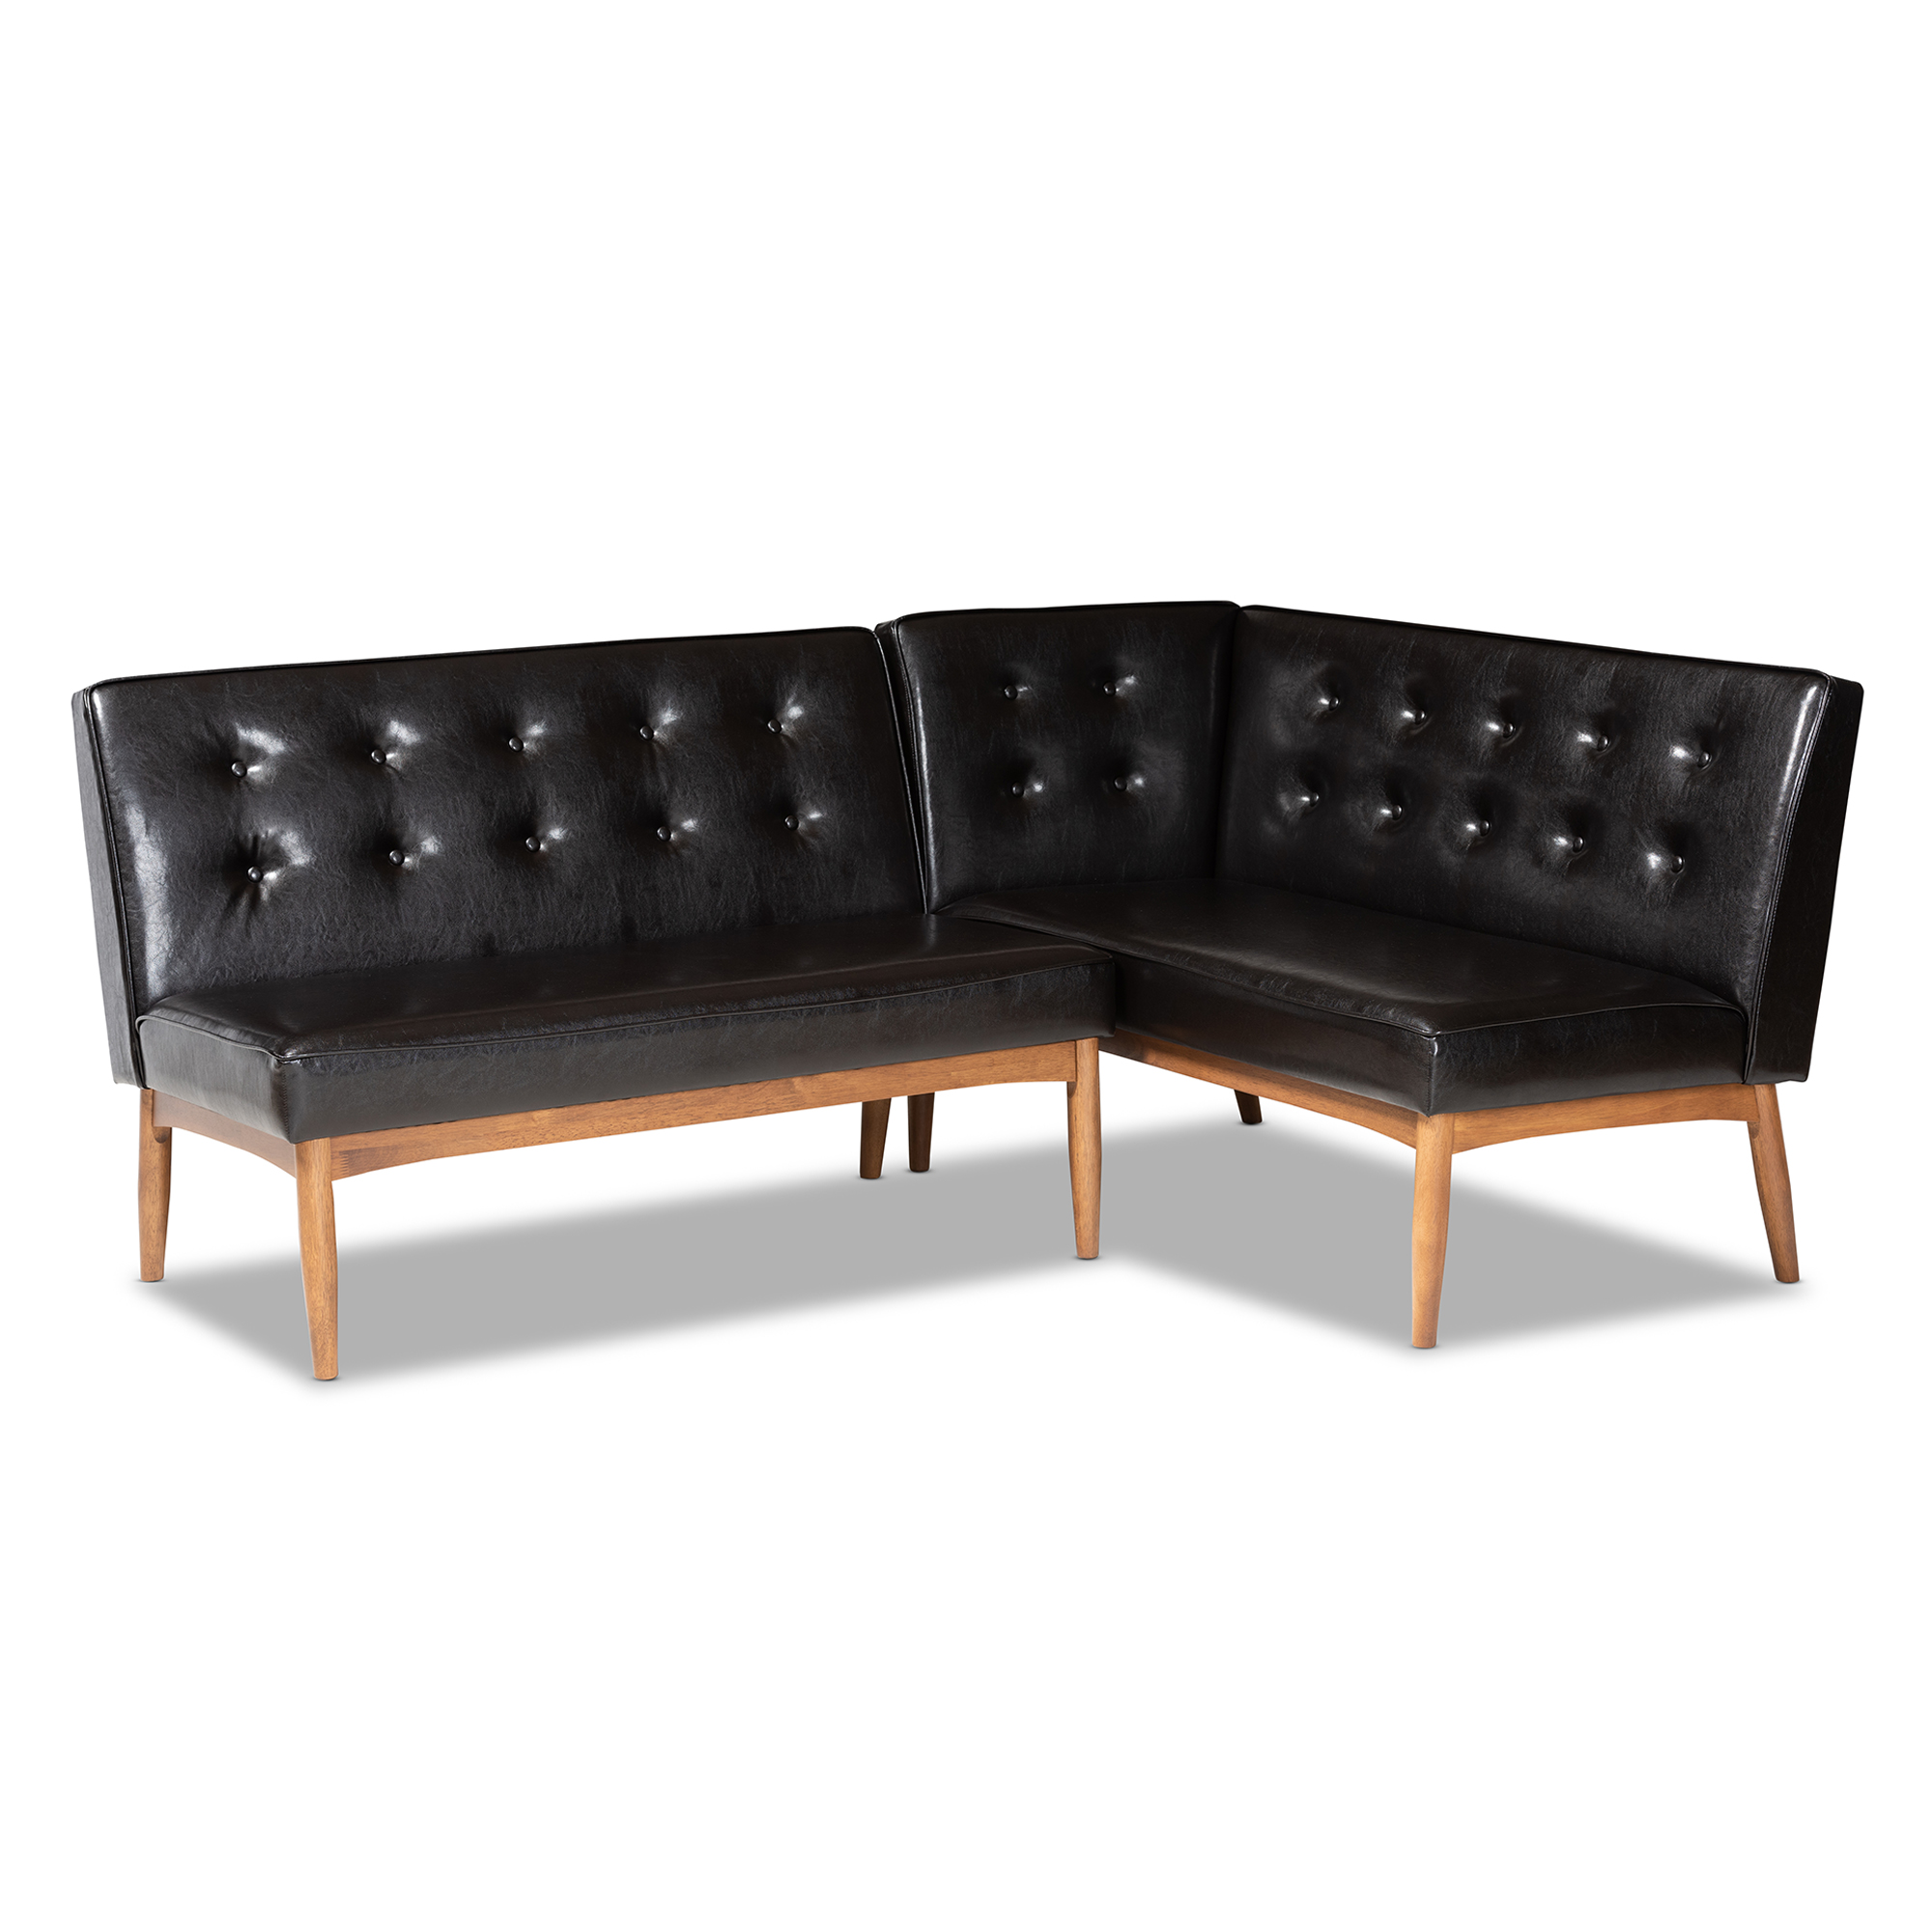 Baxton Studio Arvid Mid-Century Modern Dark Brown Faux Leather Upholstered 2-Piece Wood Dining Corner Sofa Bench